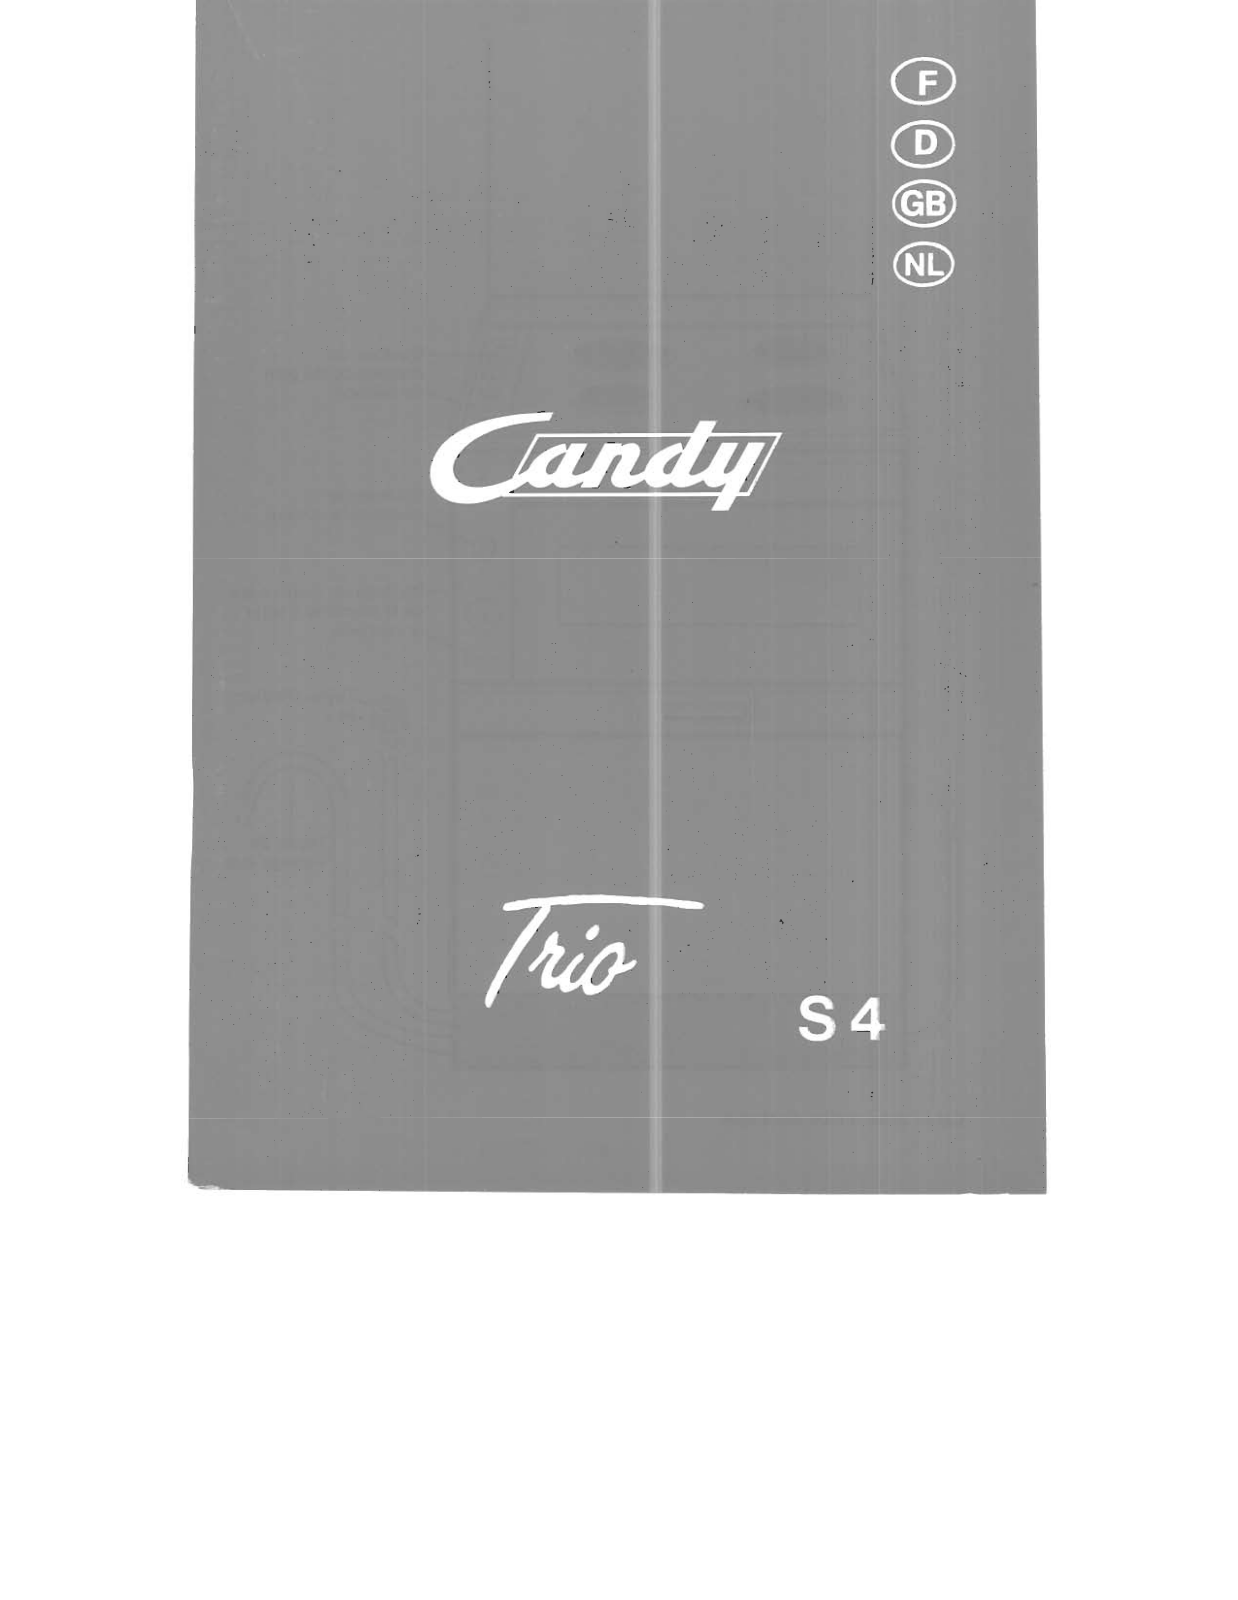 CANDY TRIOS4 User Manual